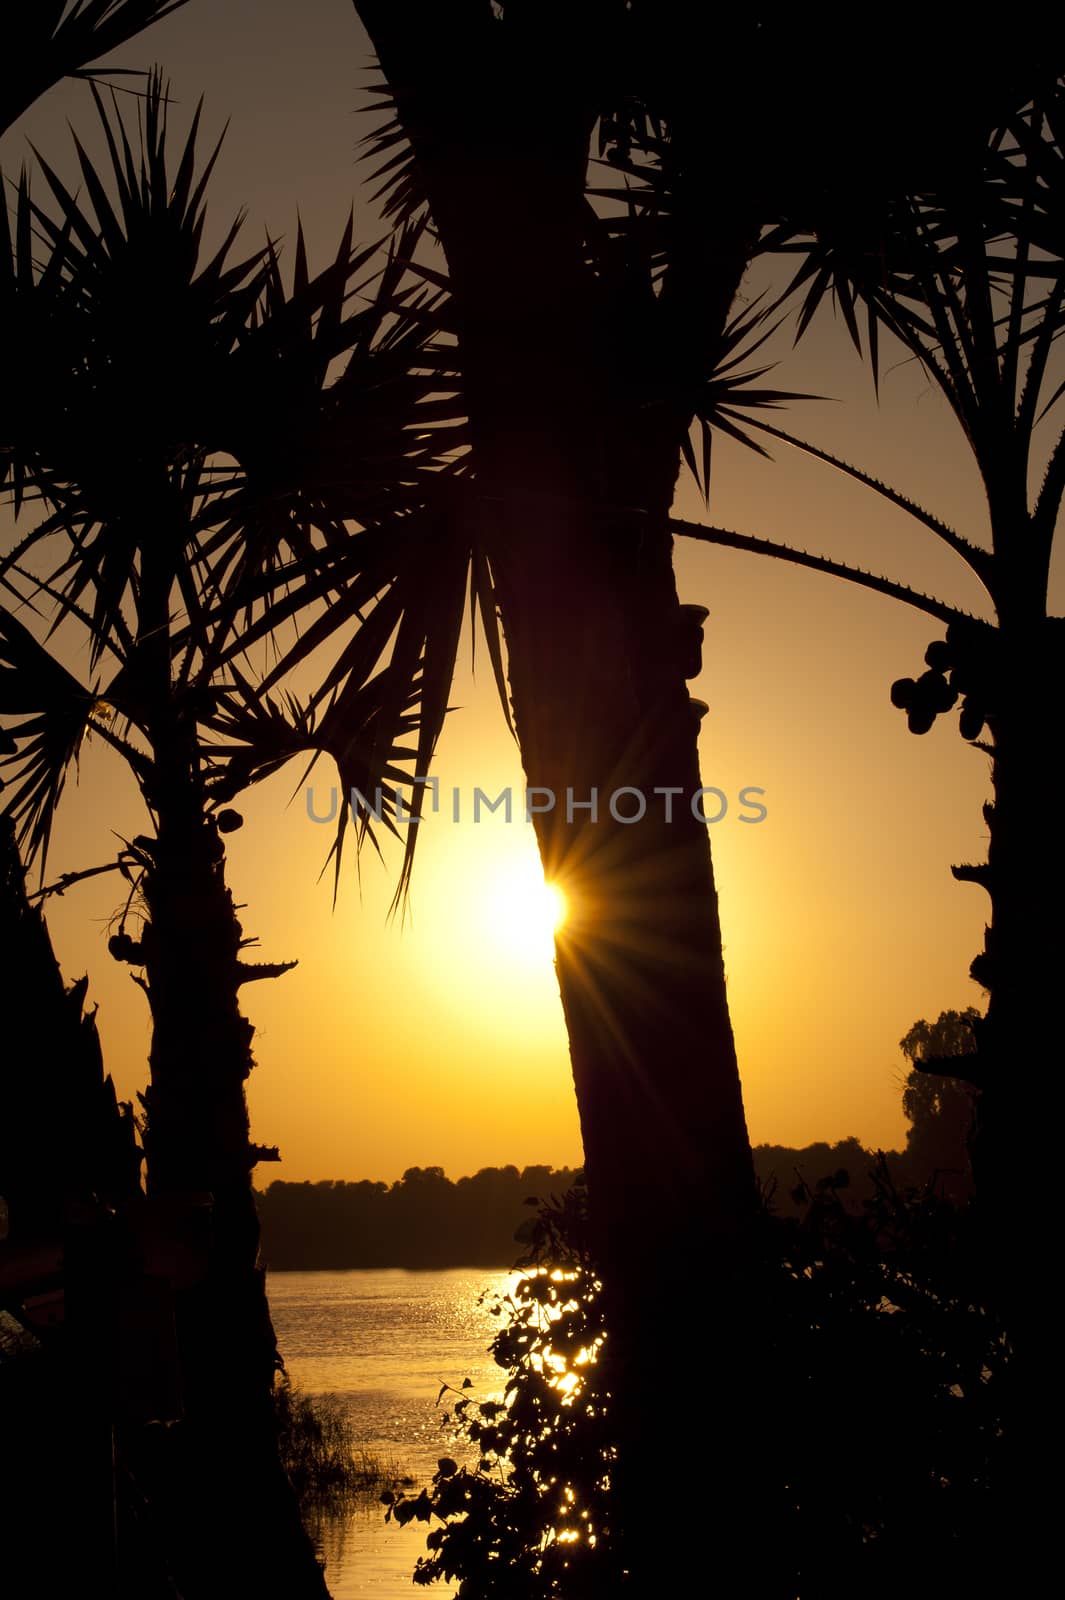 Sunset through palm trees by paulvinten